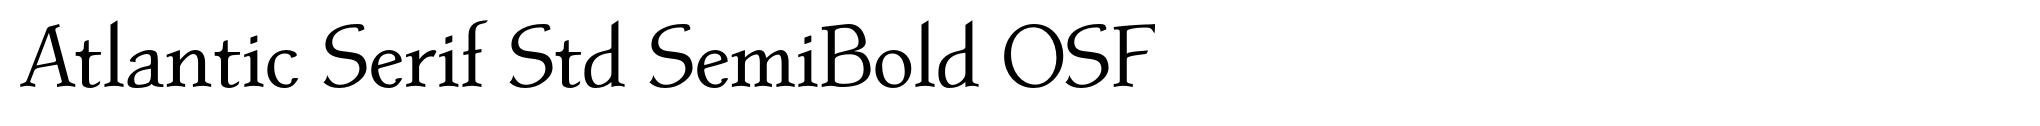 Atlantic Serif Std SemiBold OSF image